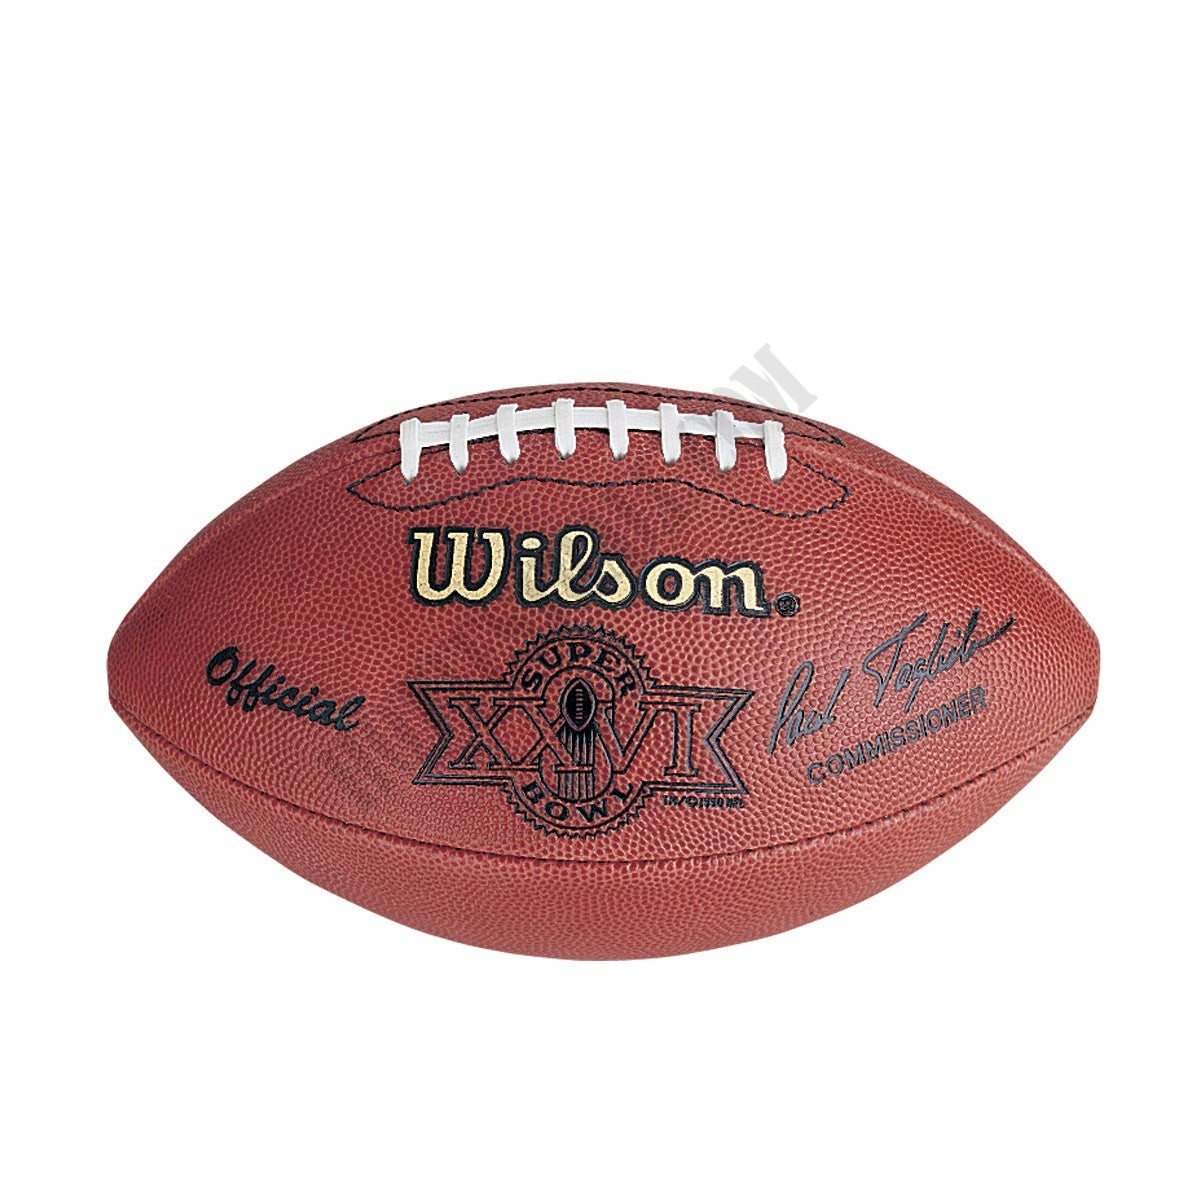 Super Bowl XXVI Game Football - Washington ● Wilson Promotions - Super Bowl XXVI Game Football - Washington ● Wilson Promotions